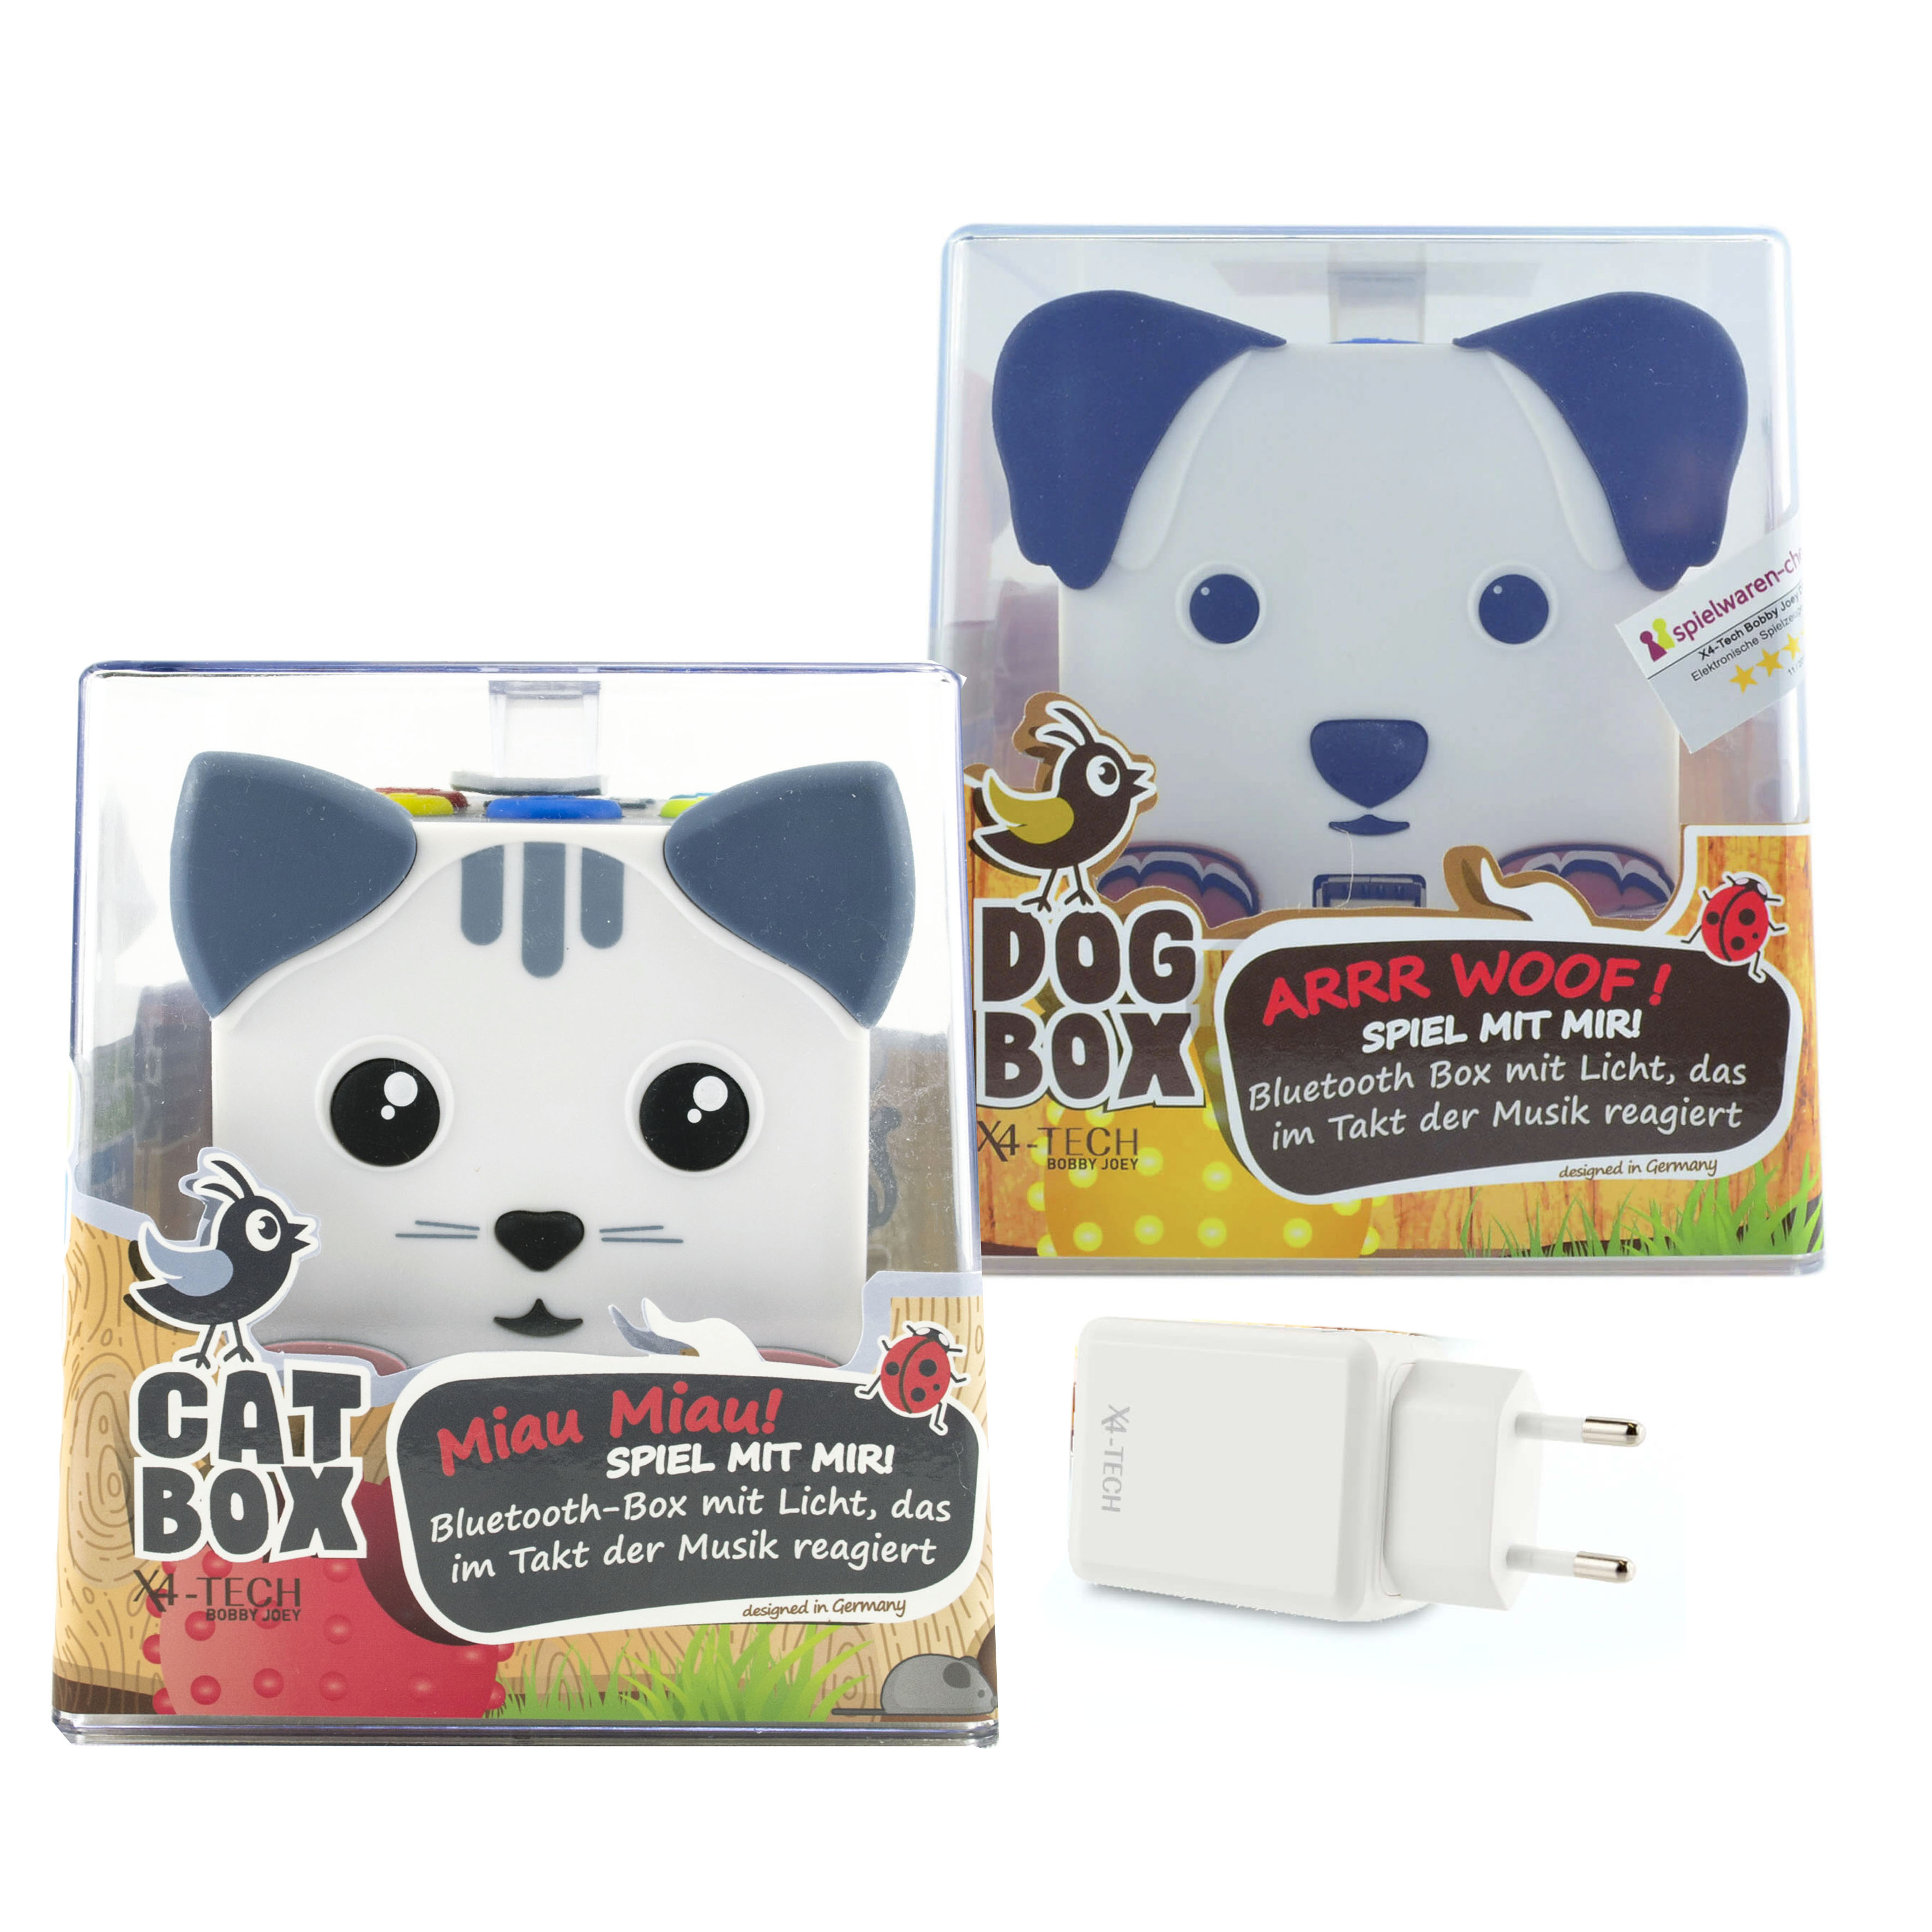 X4-TECH CatBox und DogBox Lautsprecher inkl. Netzteil Bluetooth USB SD - MusikBox Kinder Player im Set